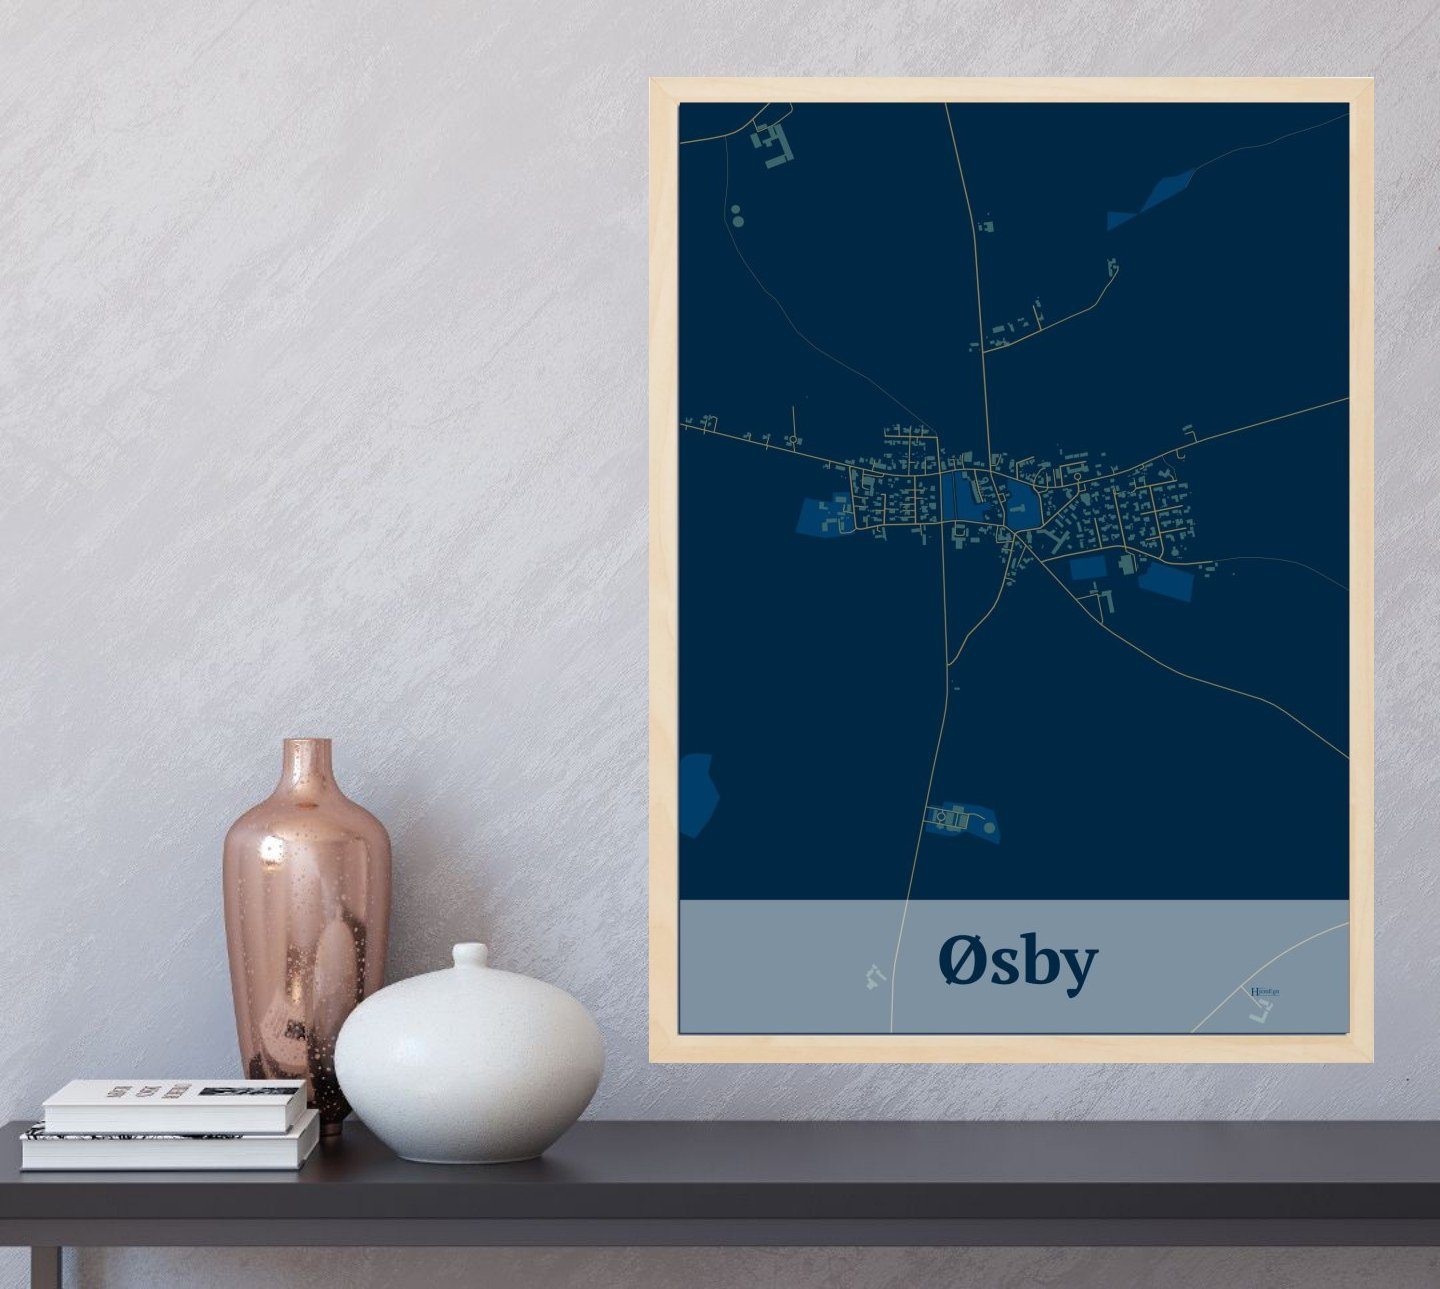 Øsby plakat i farve  og HjemEgn.dk design firkantet. Design bykort for Øsby